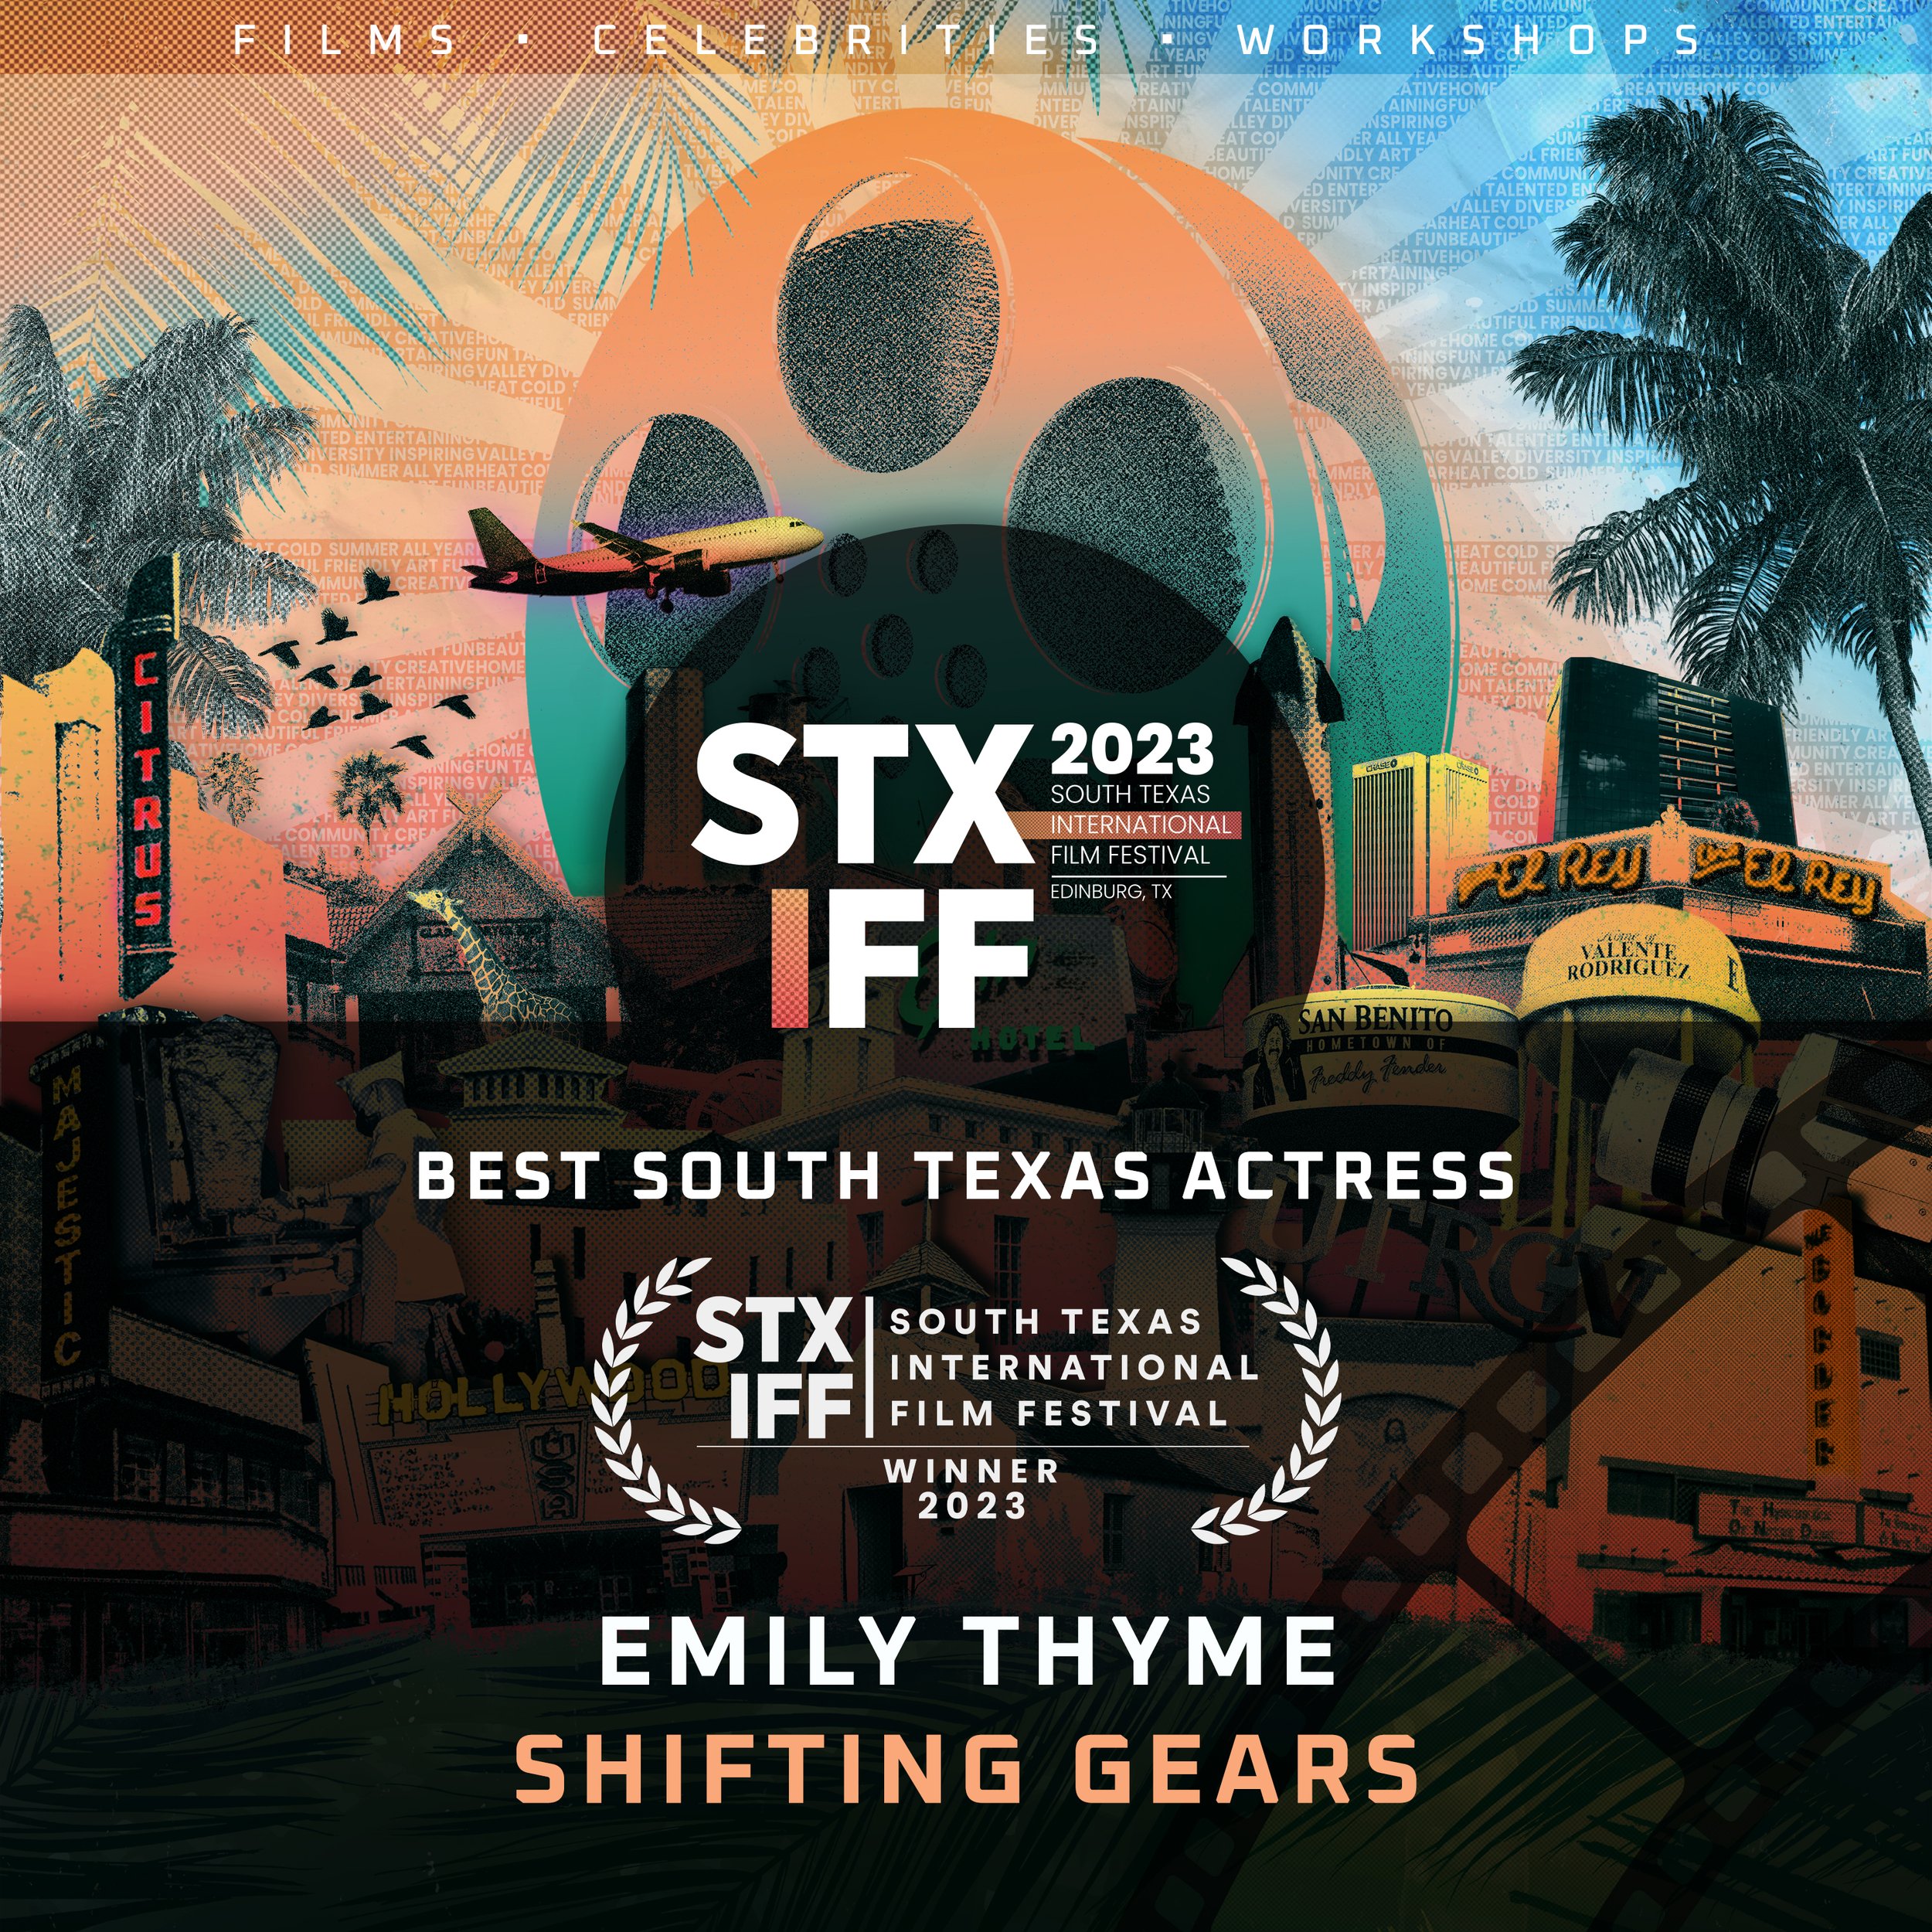 Copy of STXIFF23_Winner-BEST SOUTH TEXAS ACTRESS.jpg